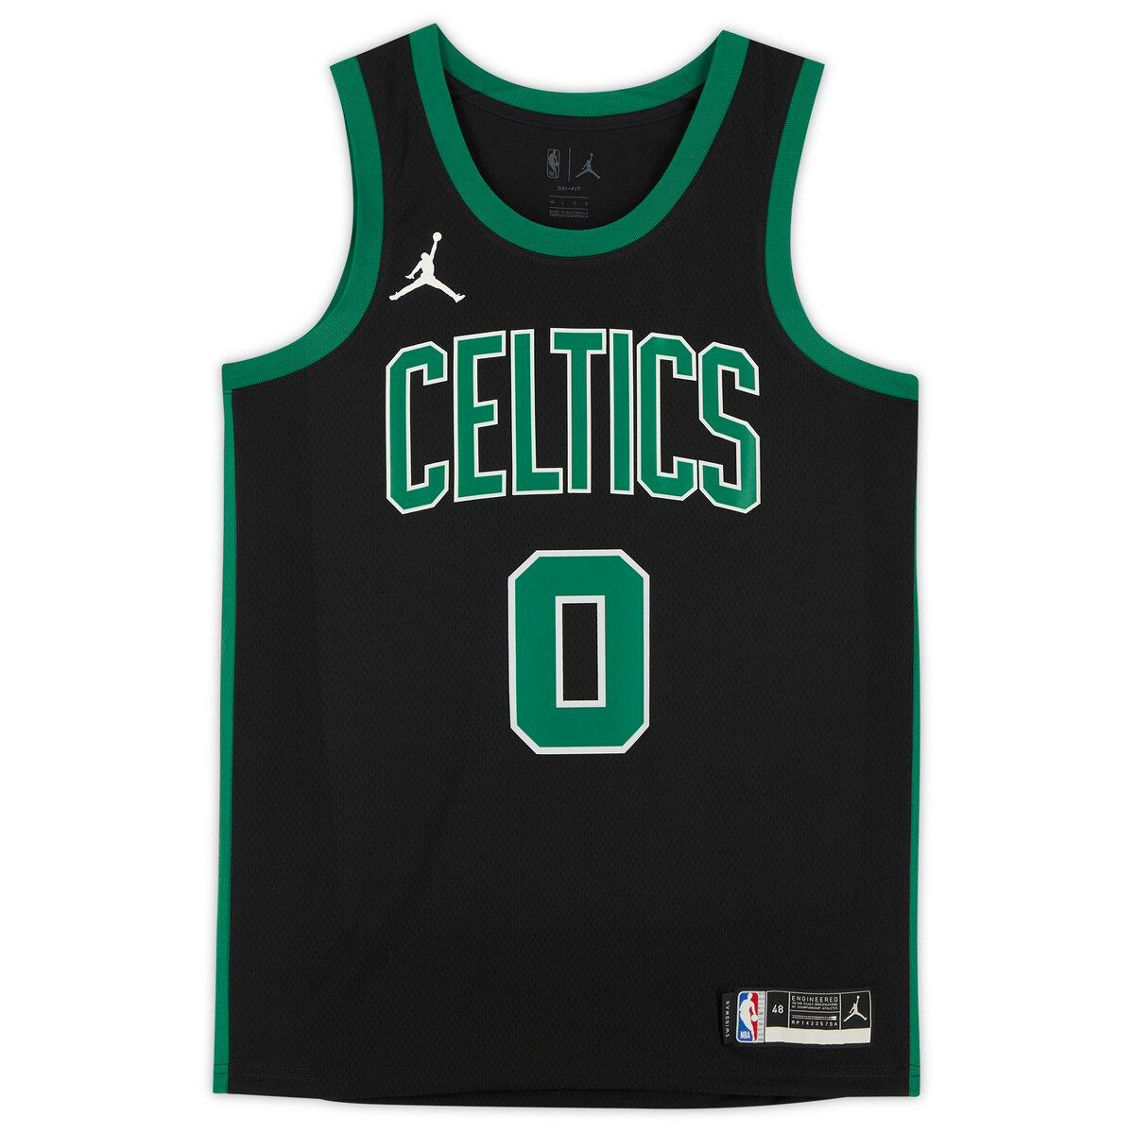 Fanatics Authentic Jayson Tatum Boston Celtics Autographed Jordan Brand 2020-21 Statement Edition Swingman Jersey - Image 4 of 4